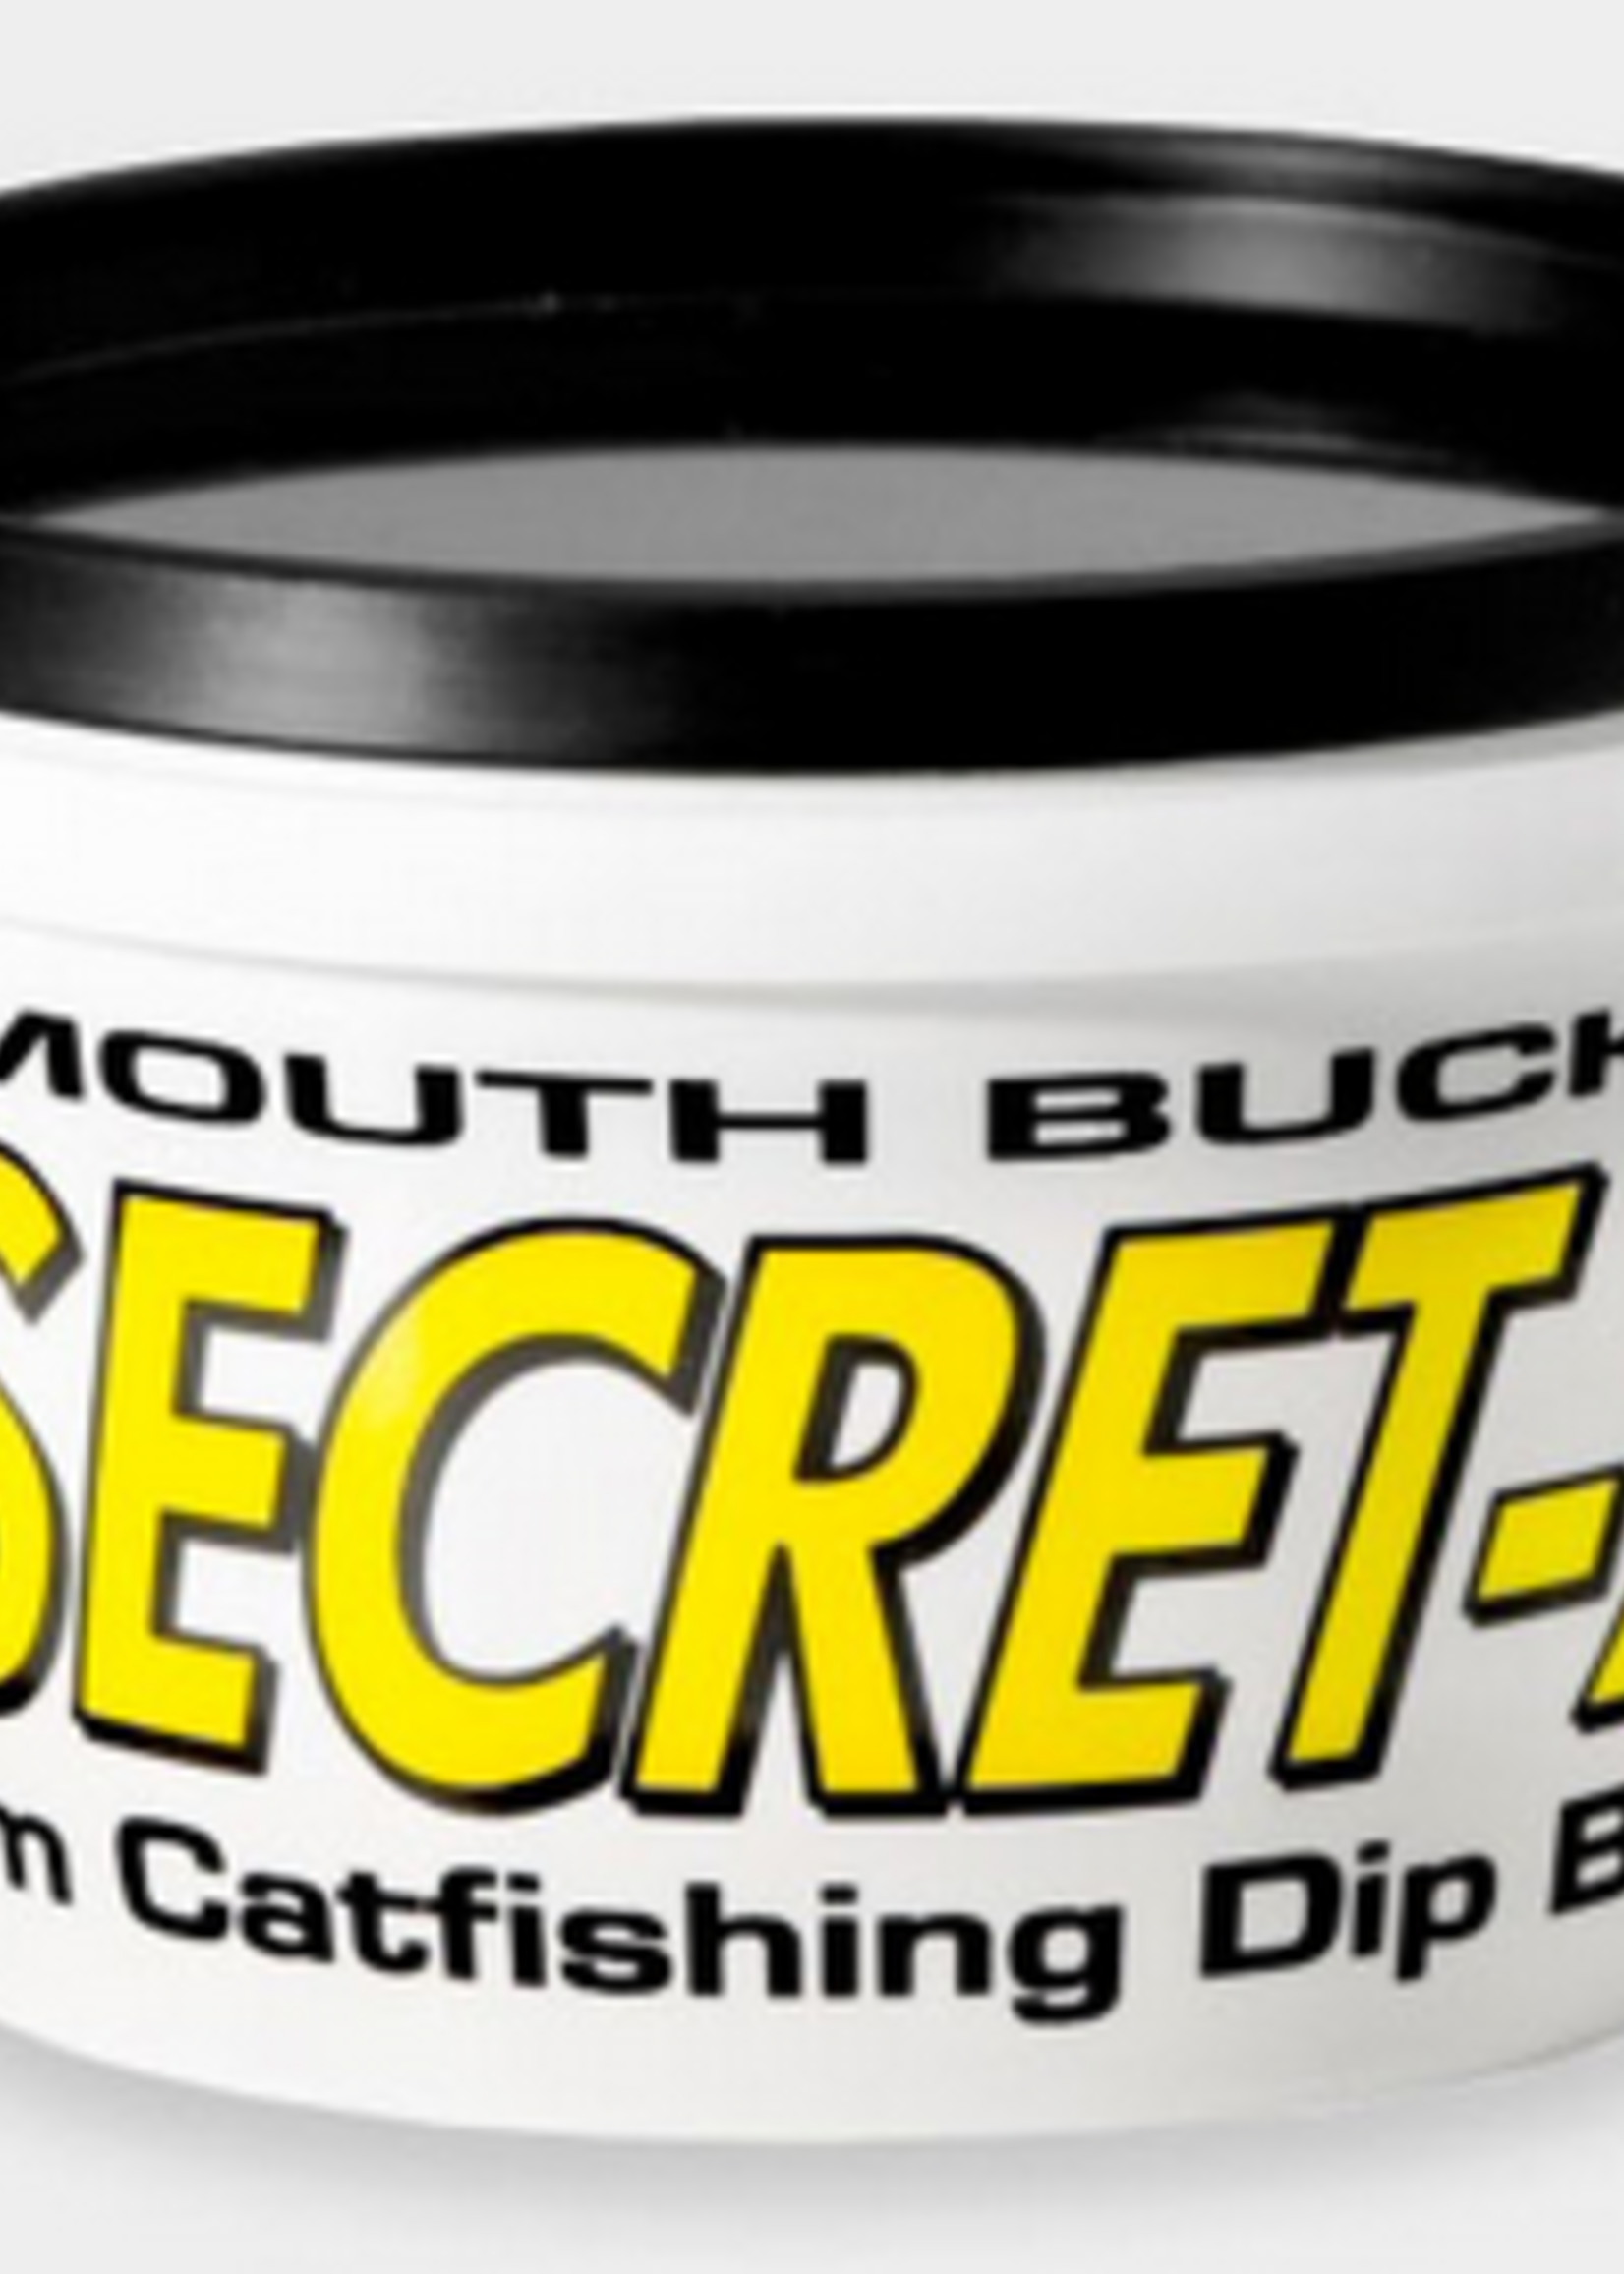 Team Catfish Secret 7 Dip Bait - Appalachian Outdoor Supply